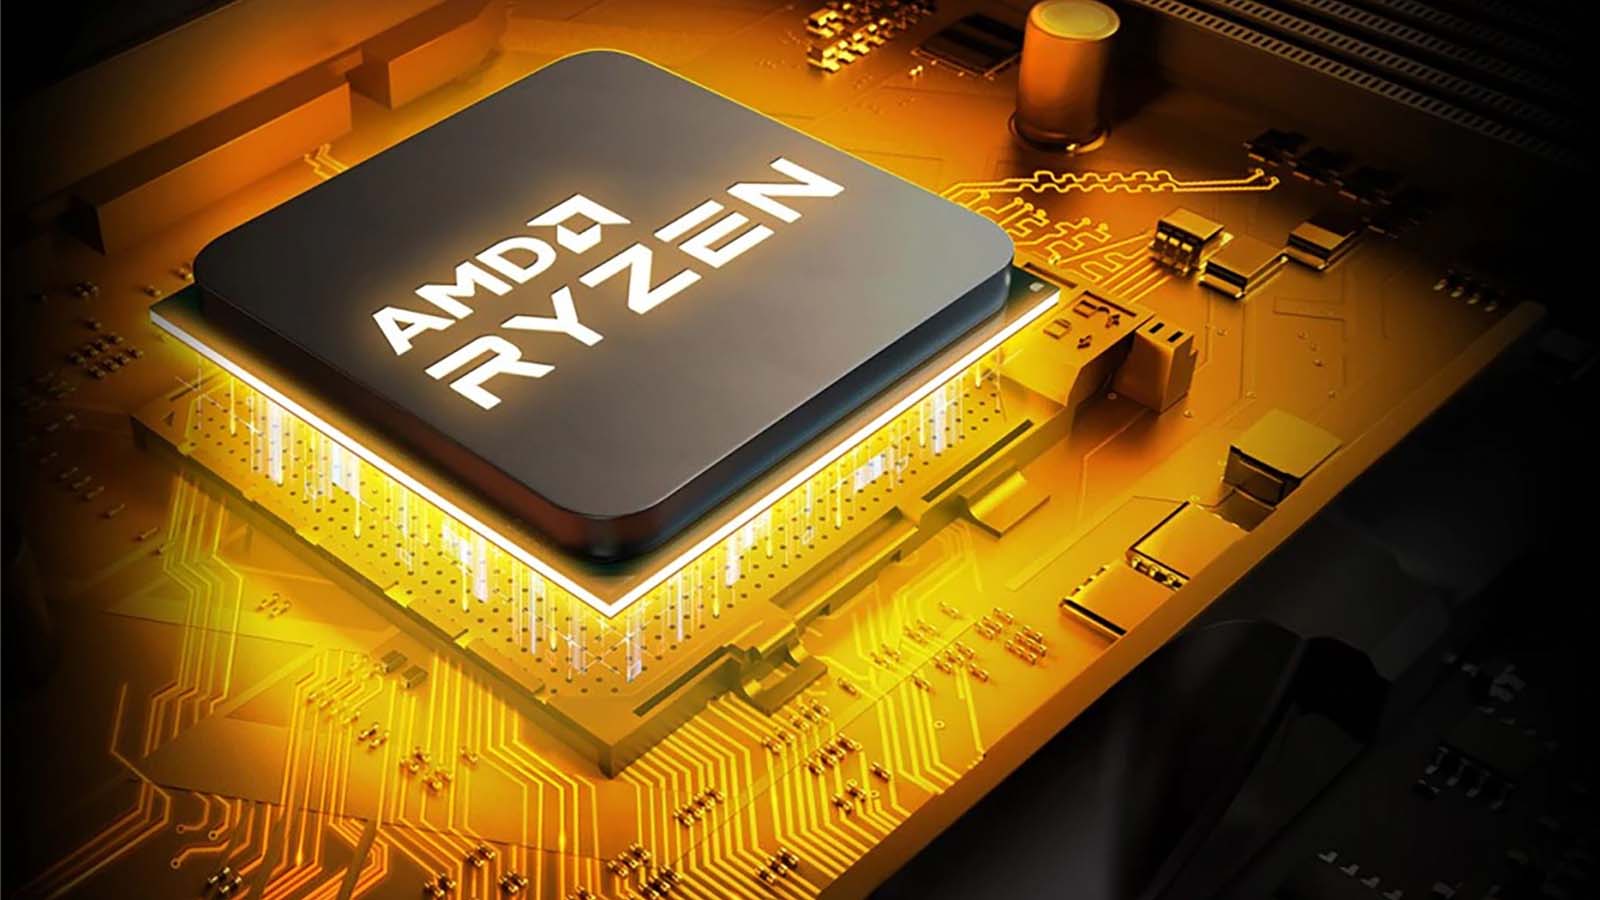 AMD Ryzen Намного Популярнее Процессоров Intel